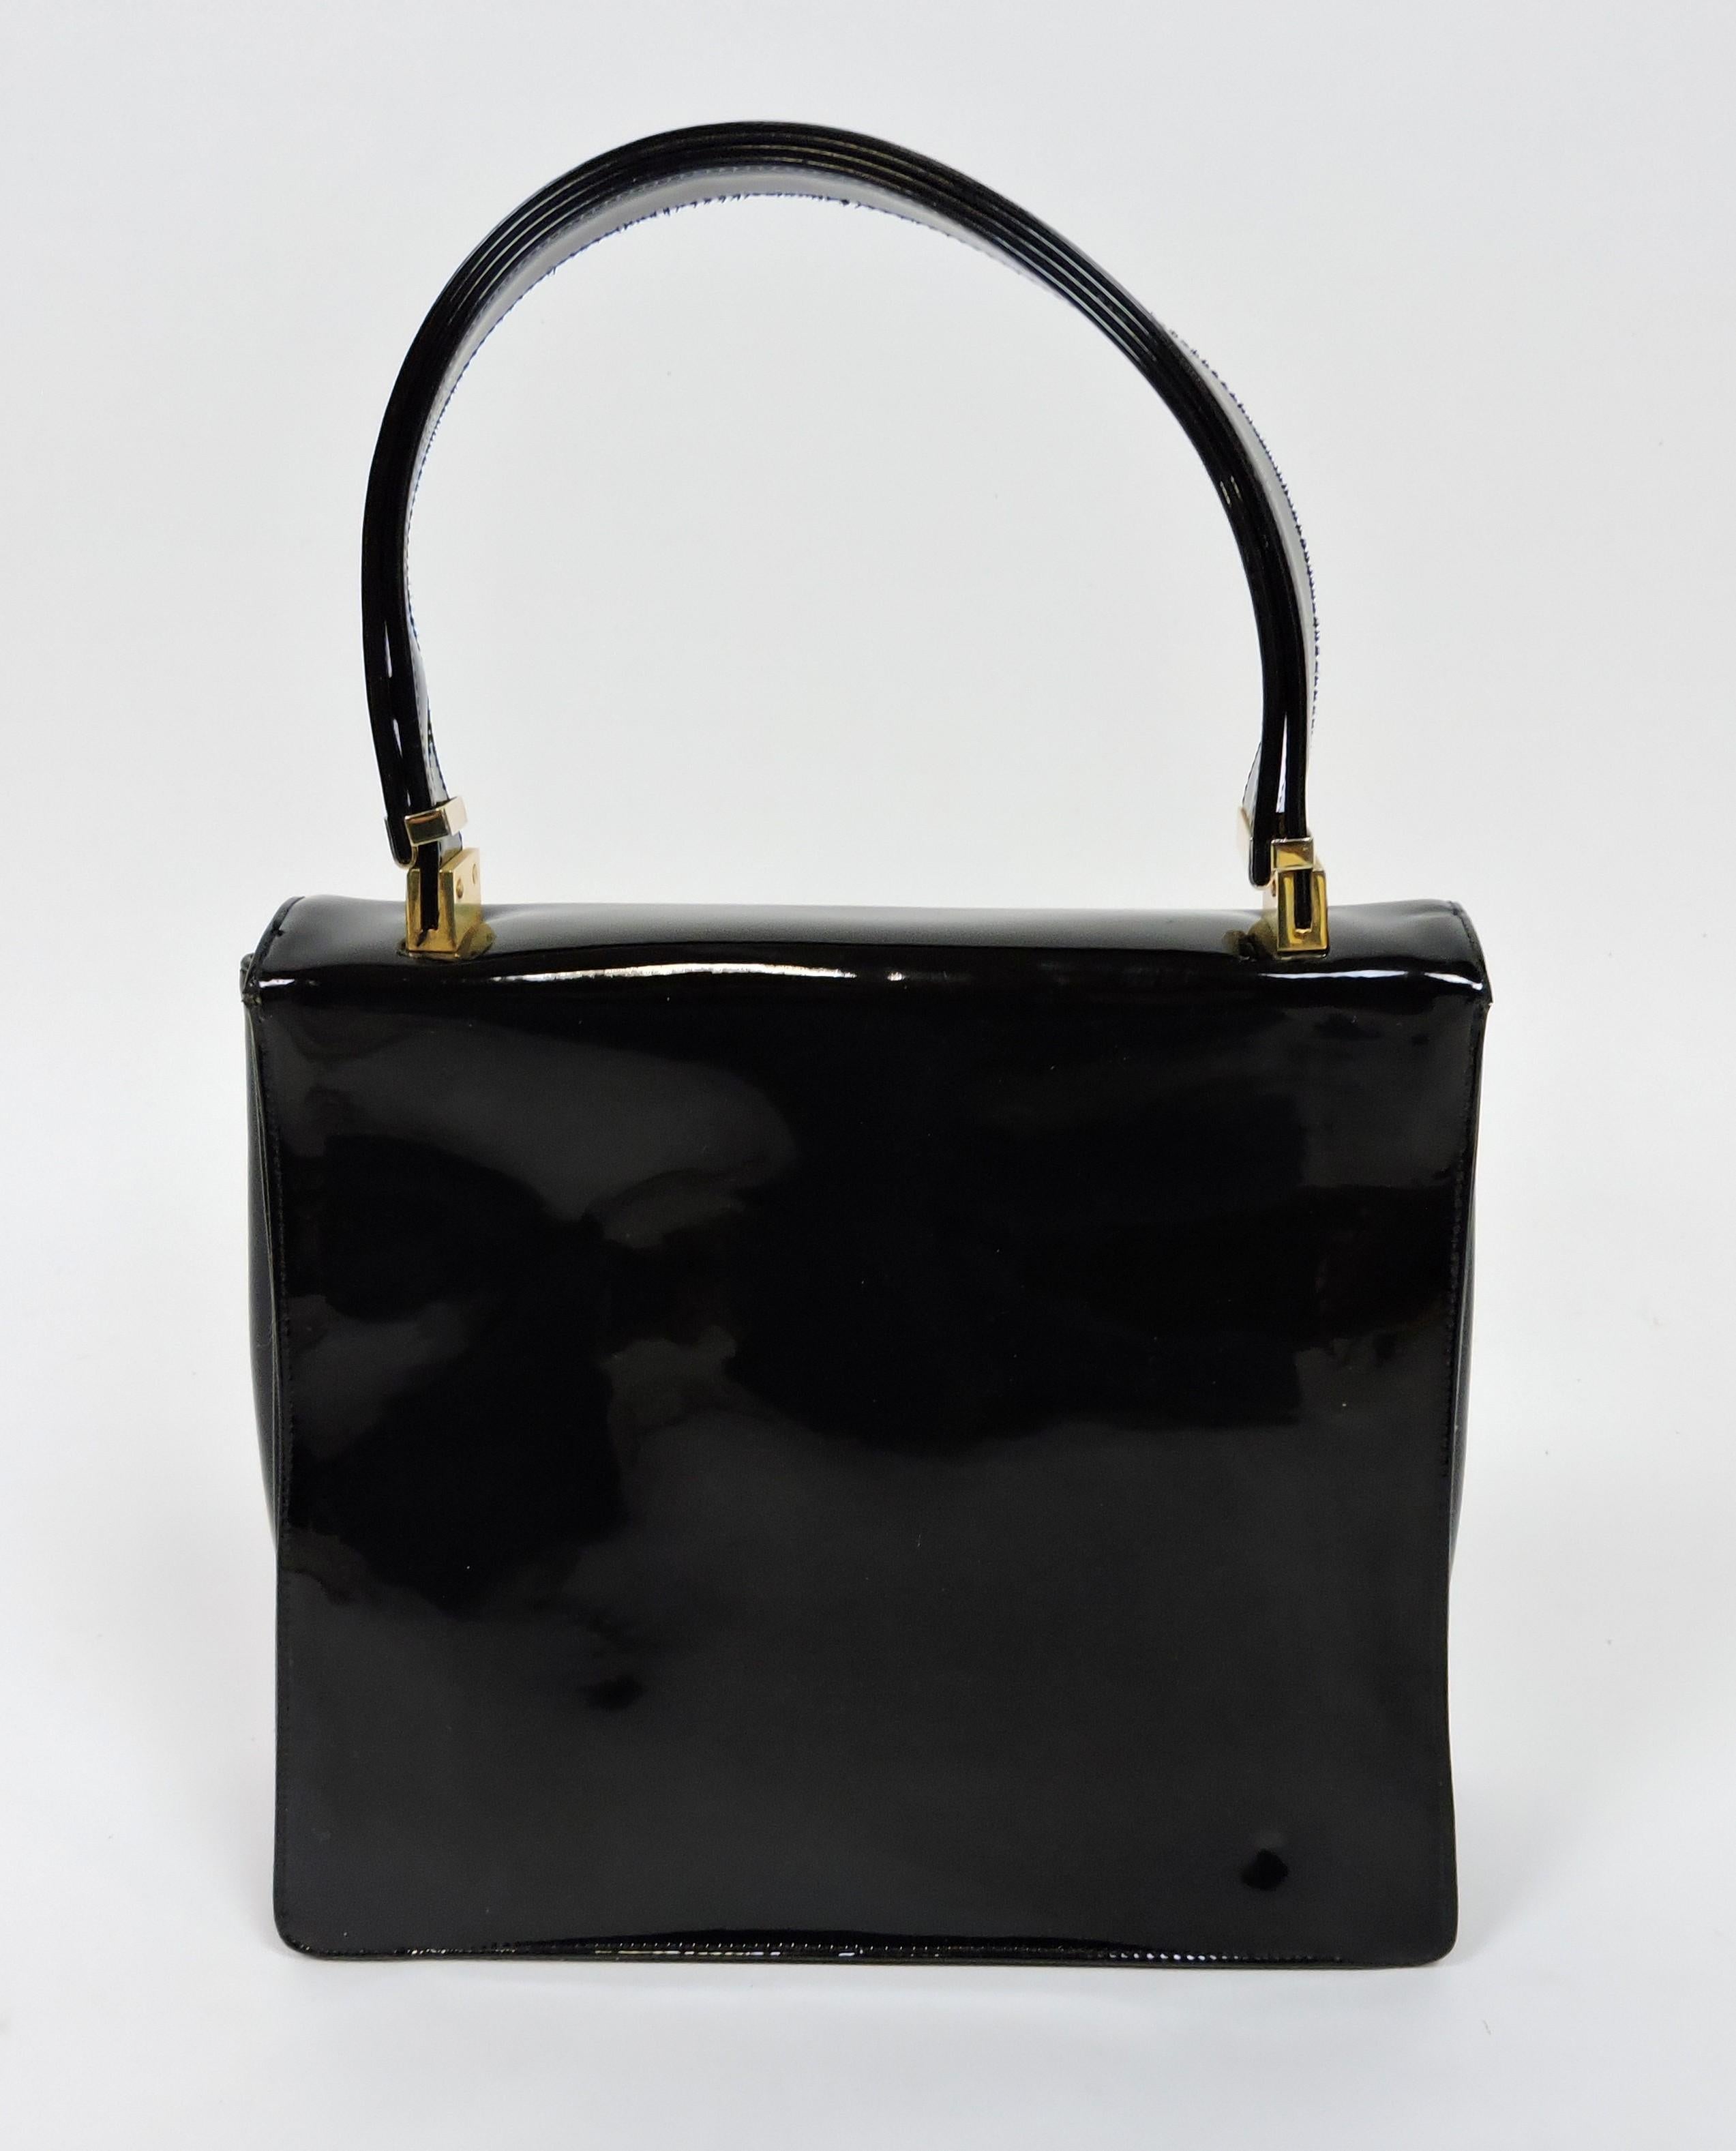 Mid-20th Century Koret Mid-Century Modern Black Patent Leather and Brass Handbag or Shoulder Bag For Sale